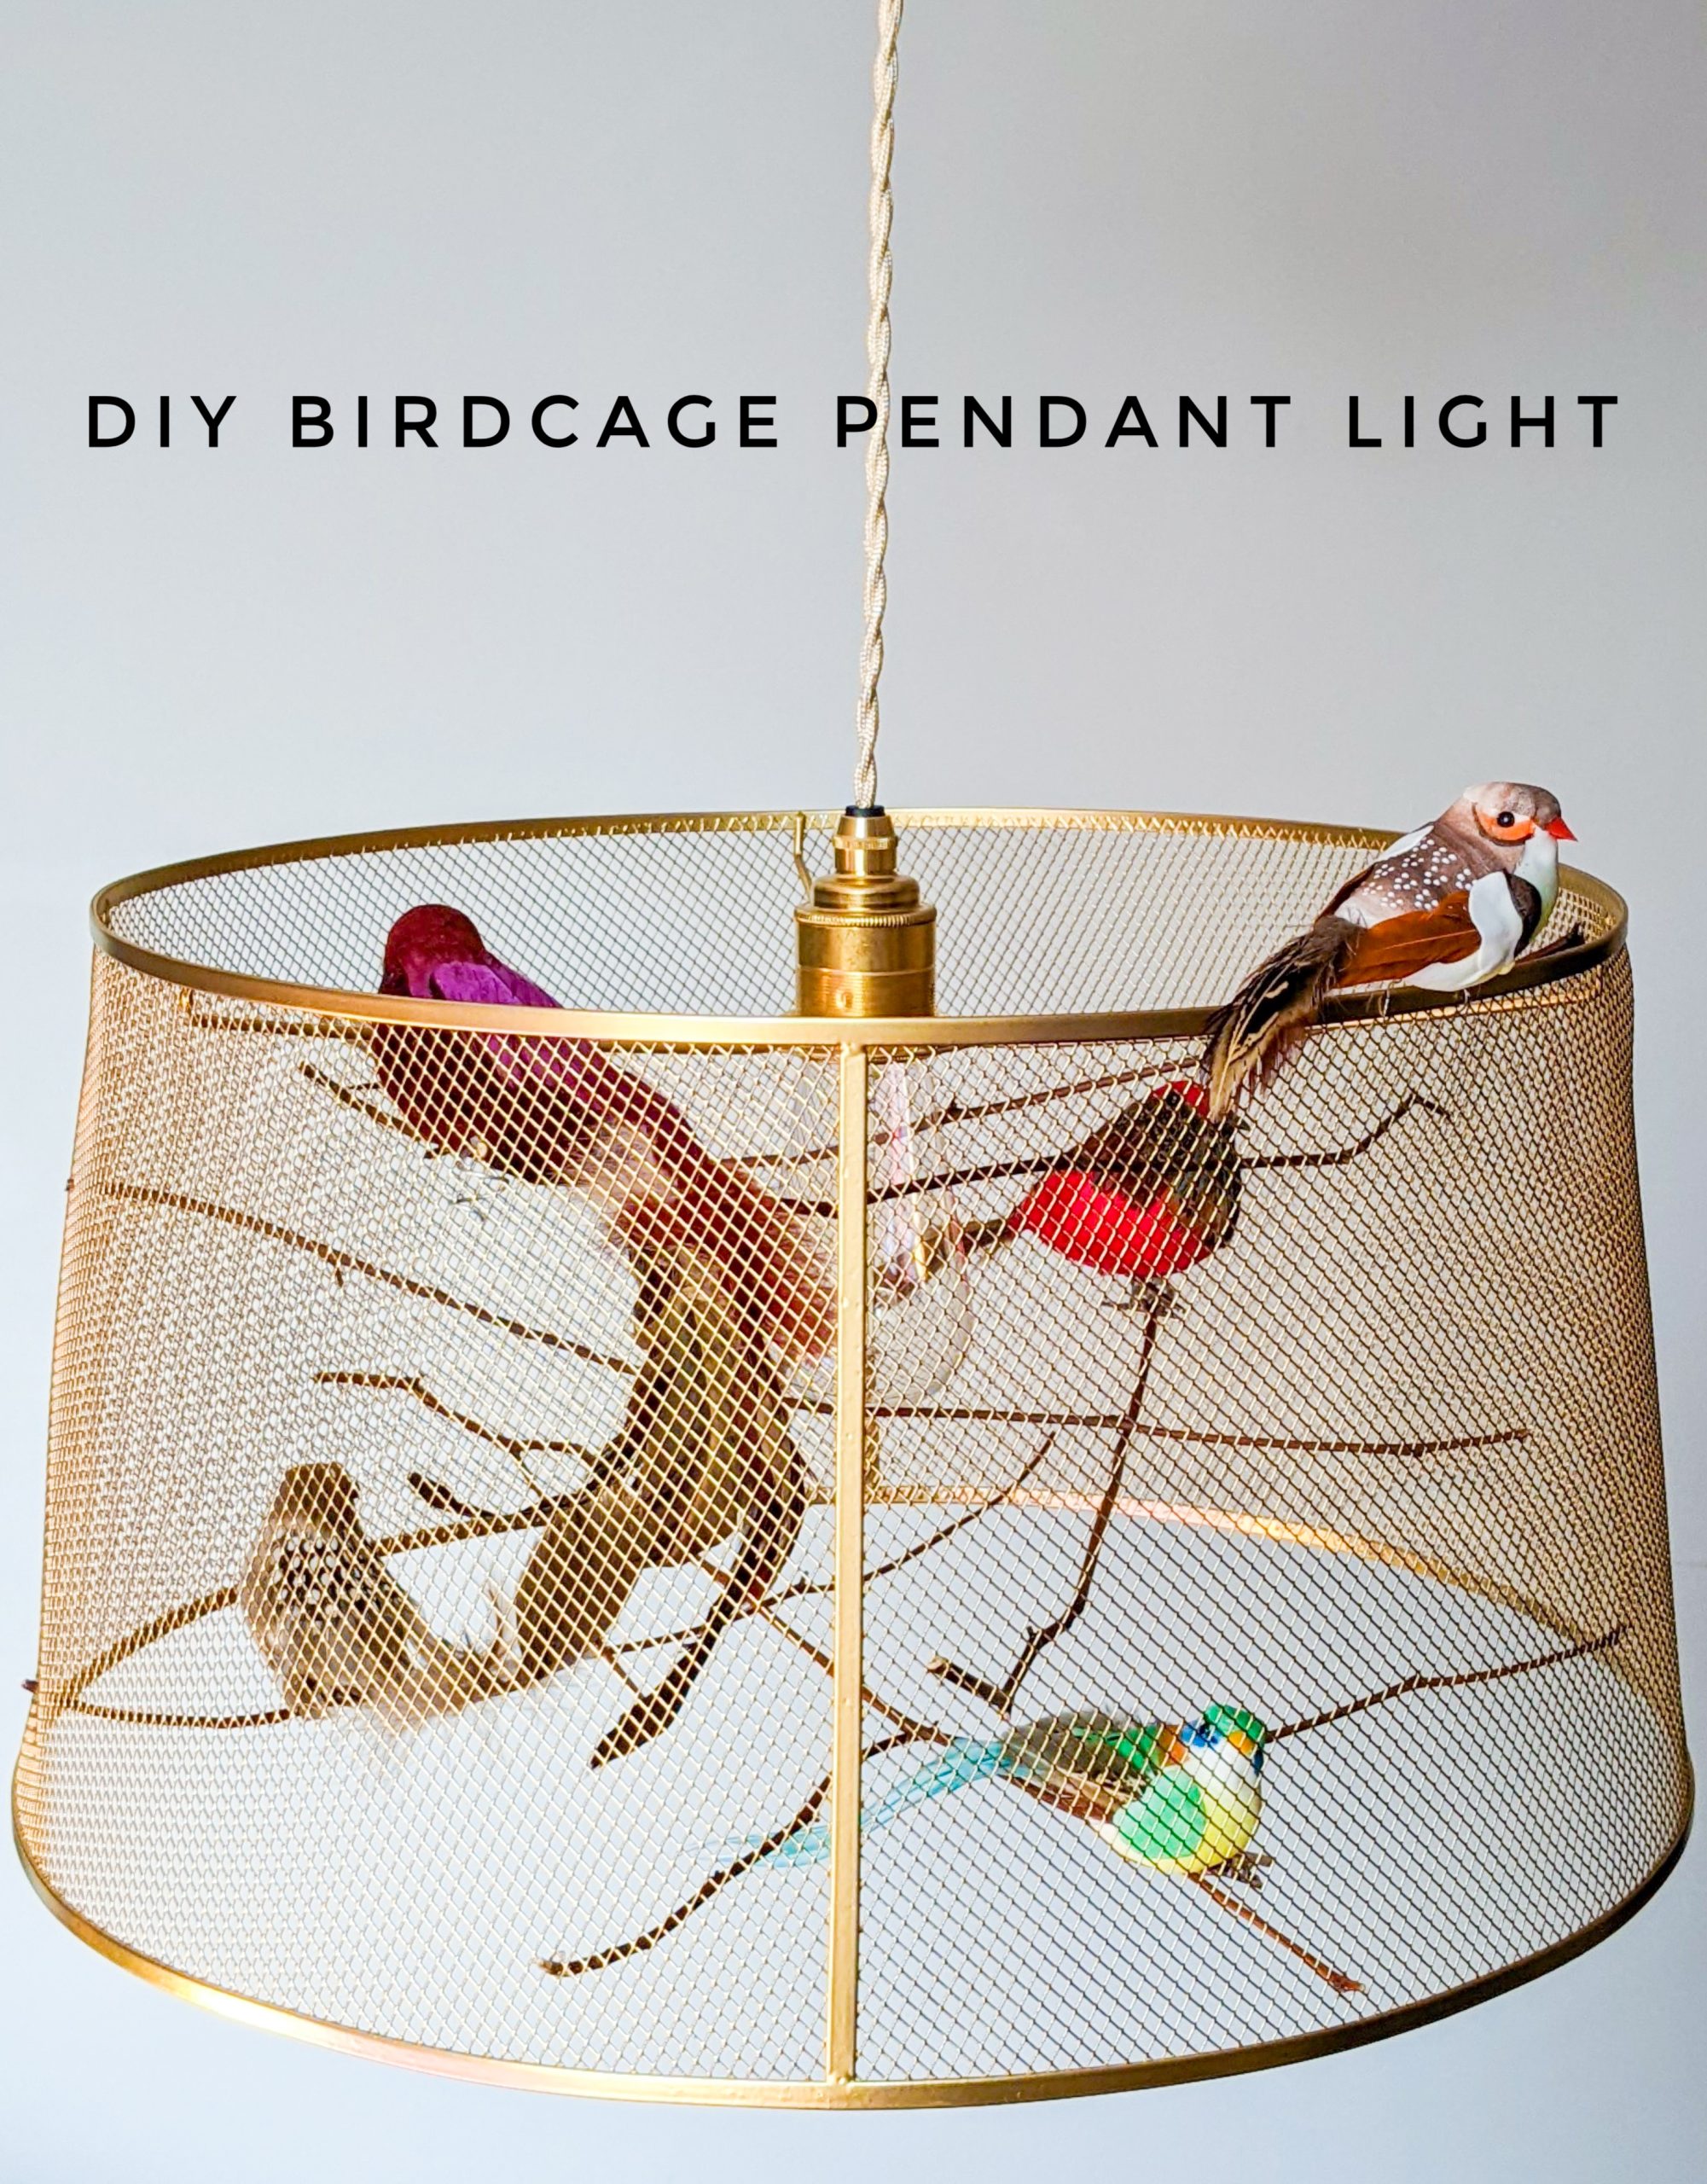 Diy Birdcage Pendant Light Eclectic Spark